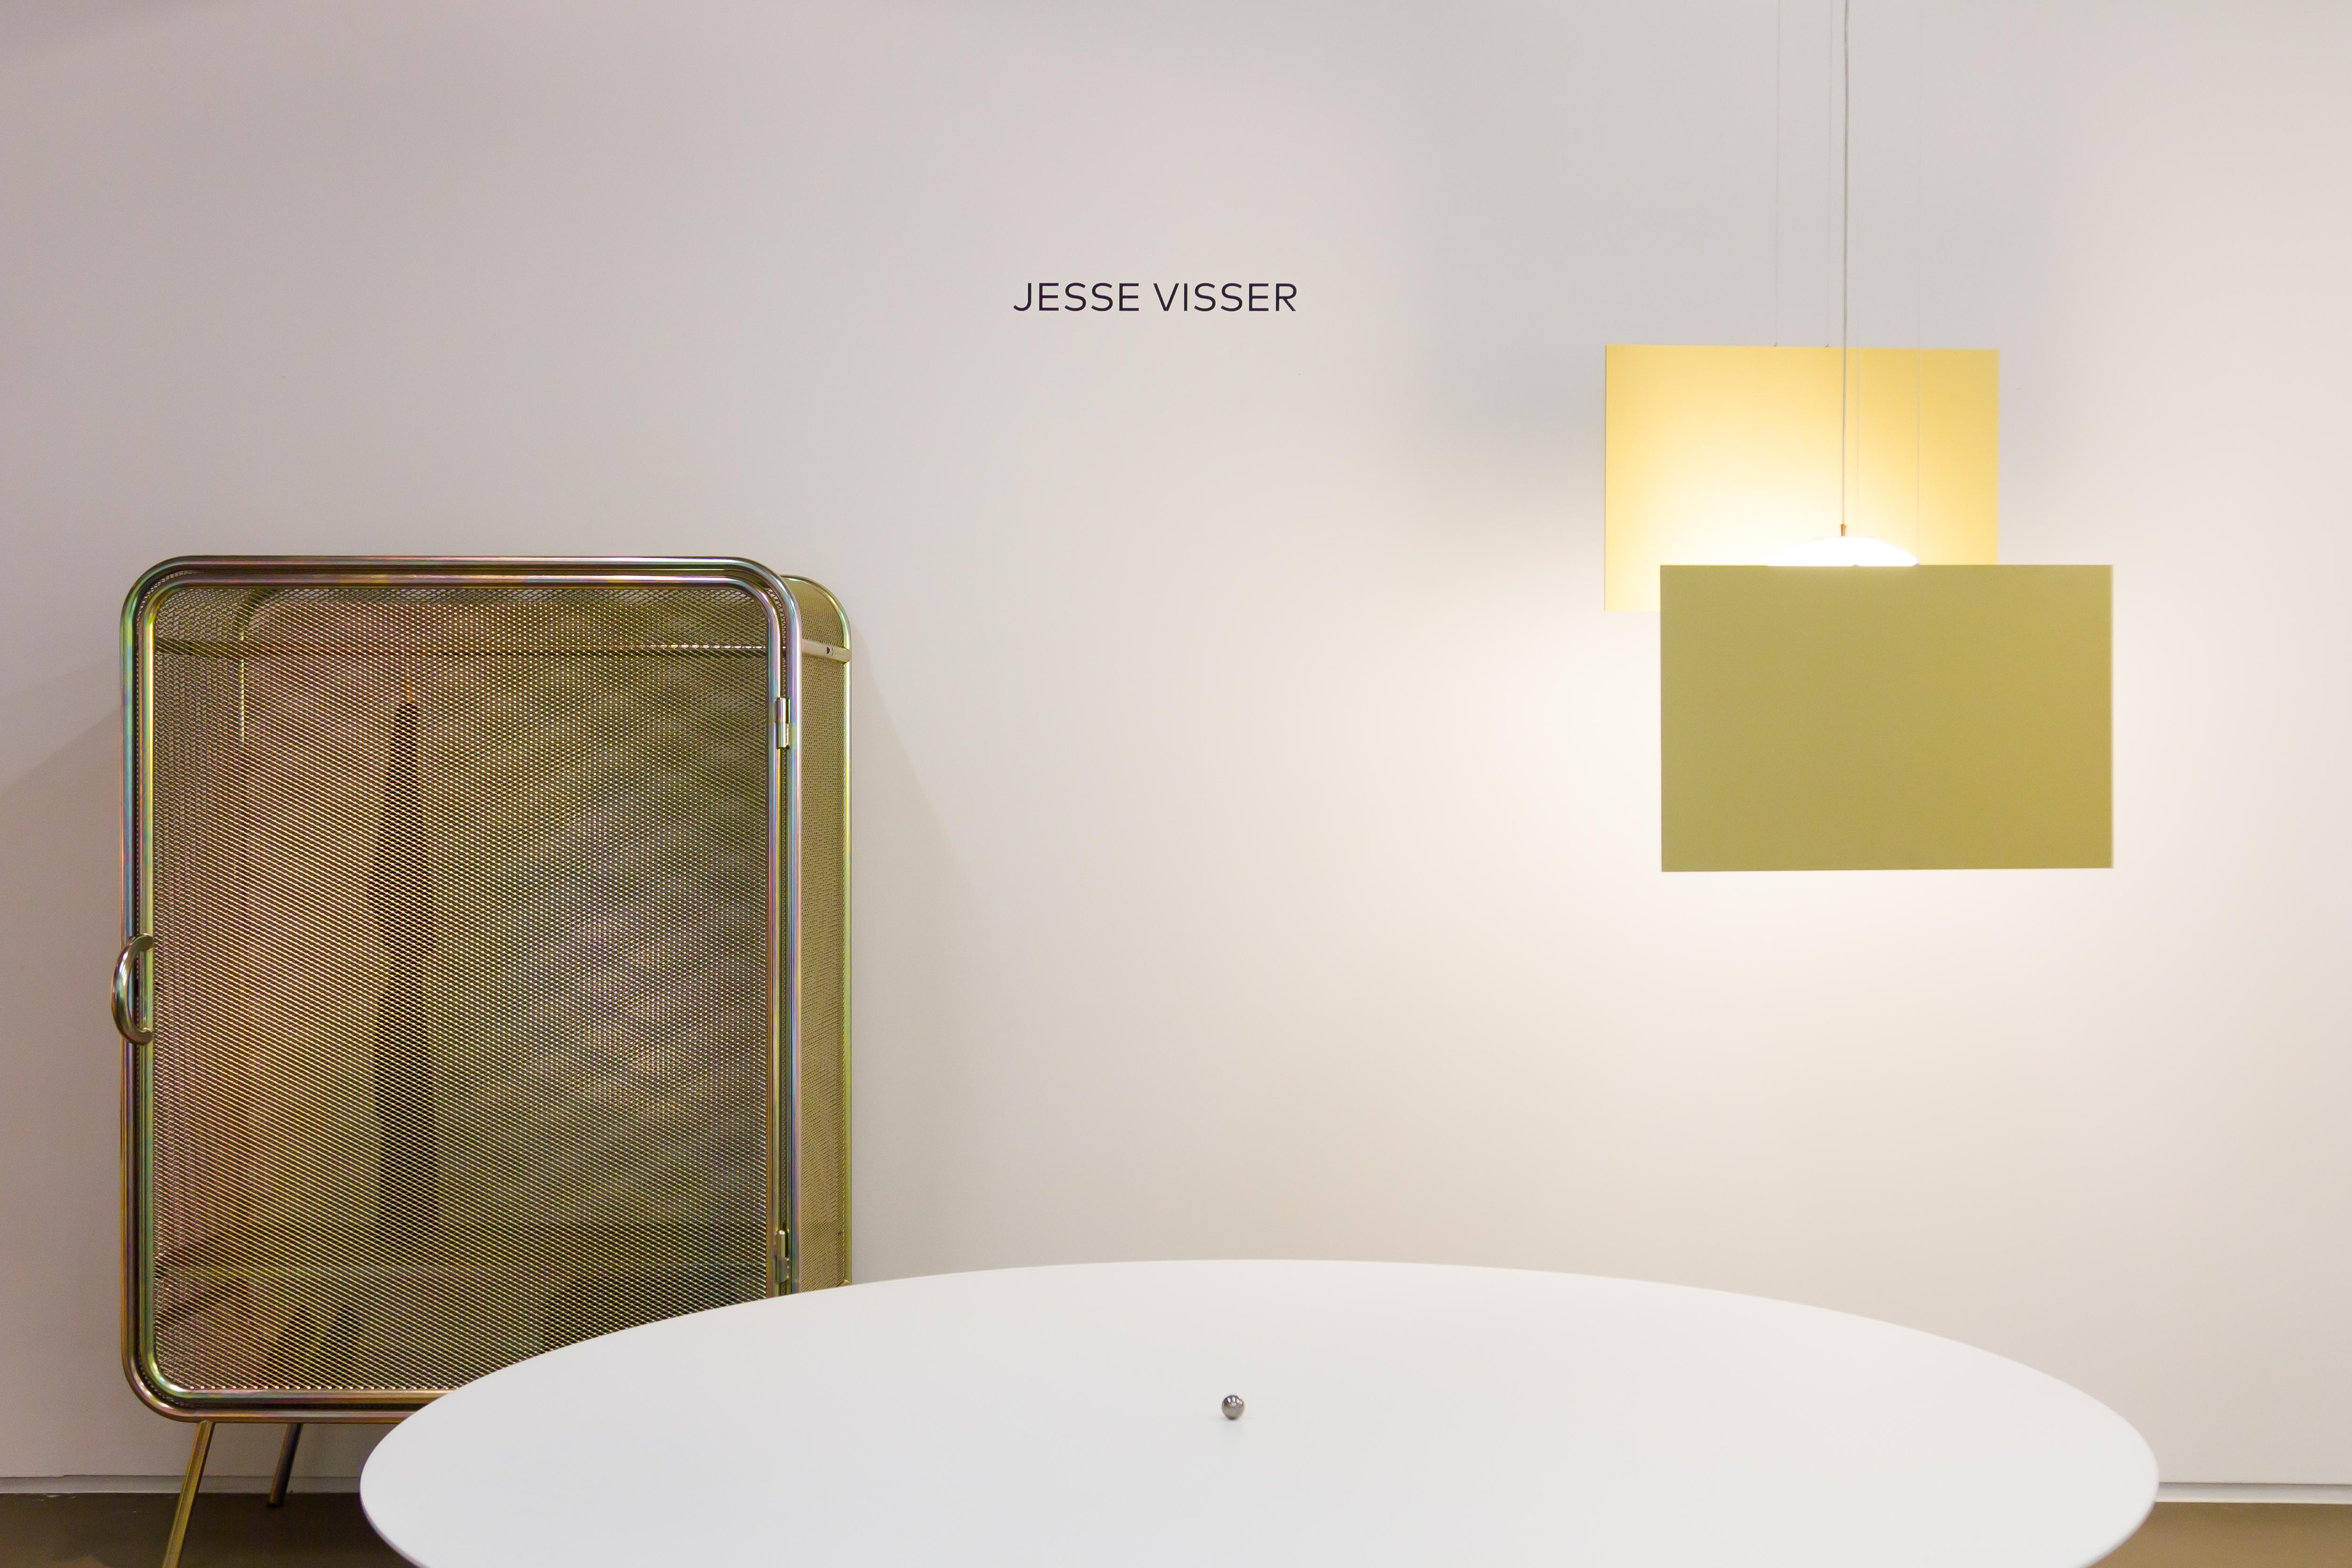 Contemporary Sphaera Table, Jesse Visser